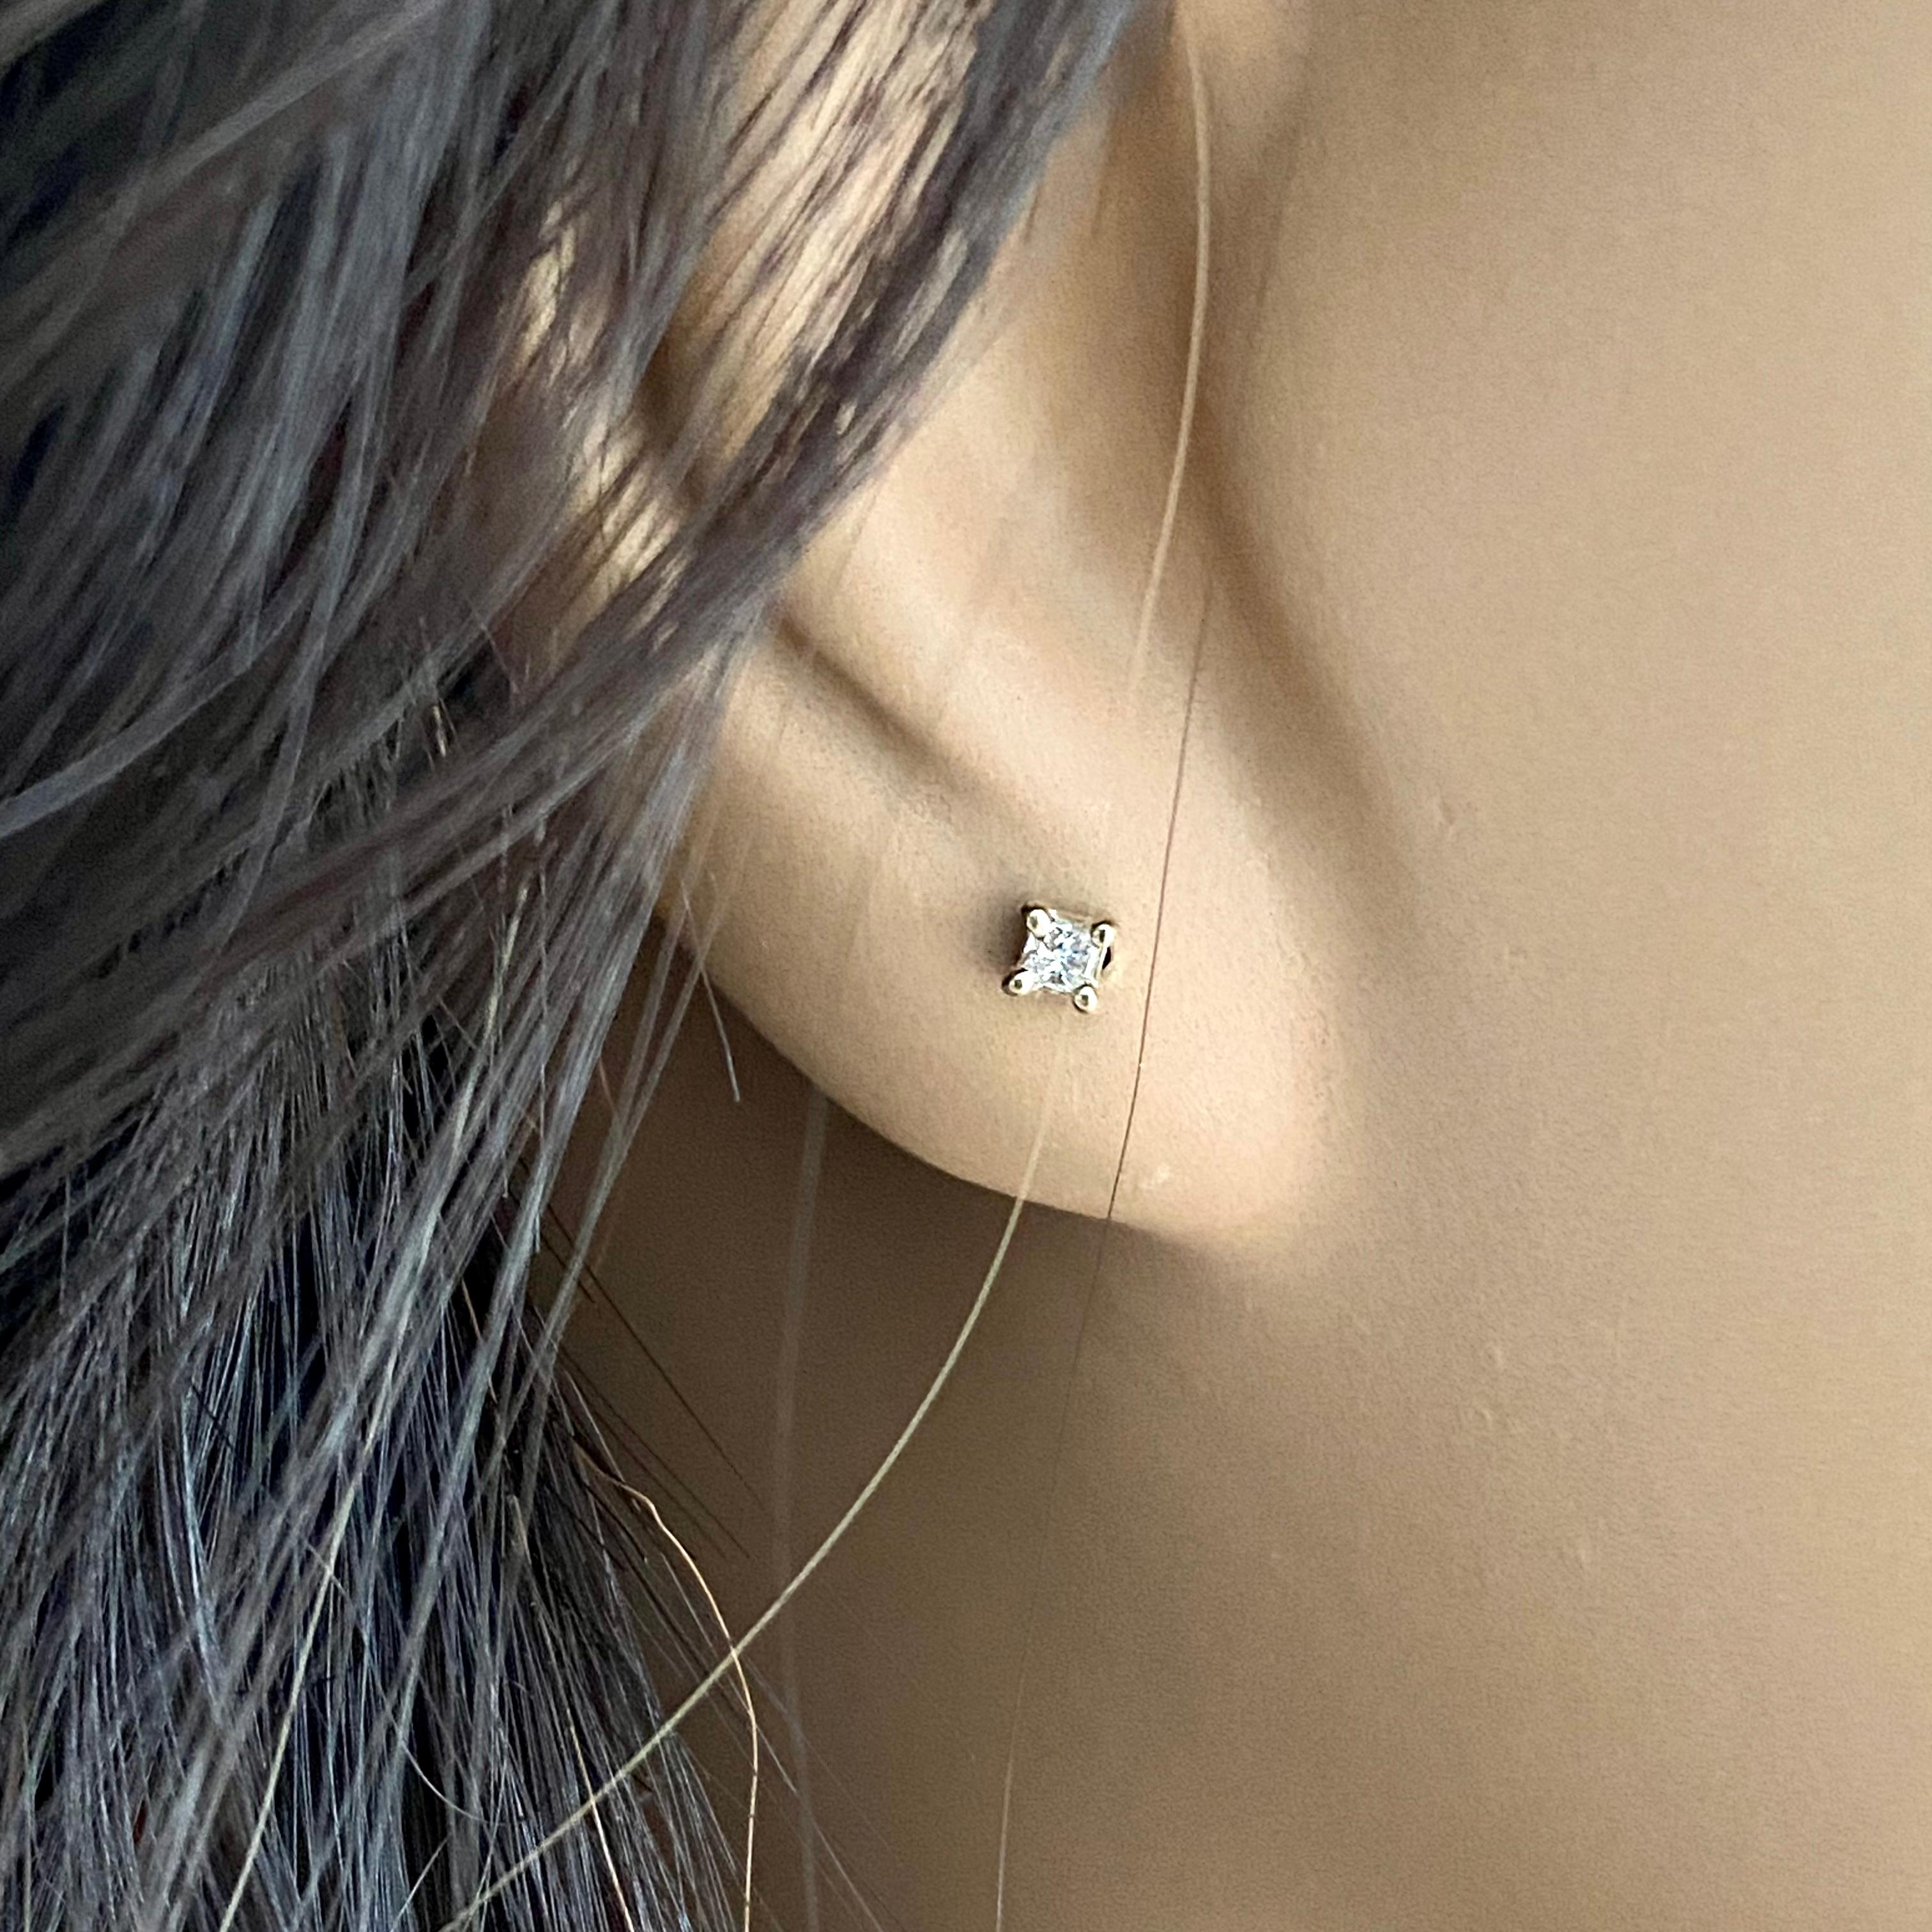 tiny diamond earrings for second hole